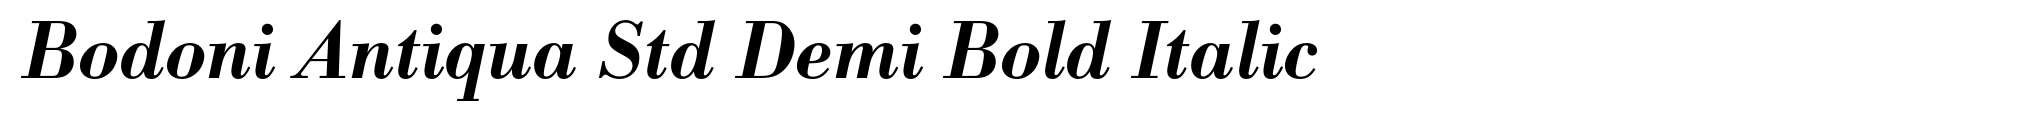 Bodoni Antiqua Std Demi Bold Italic image